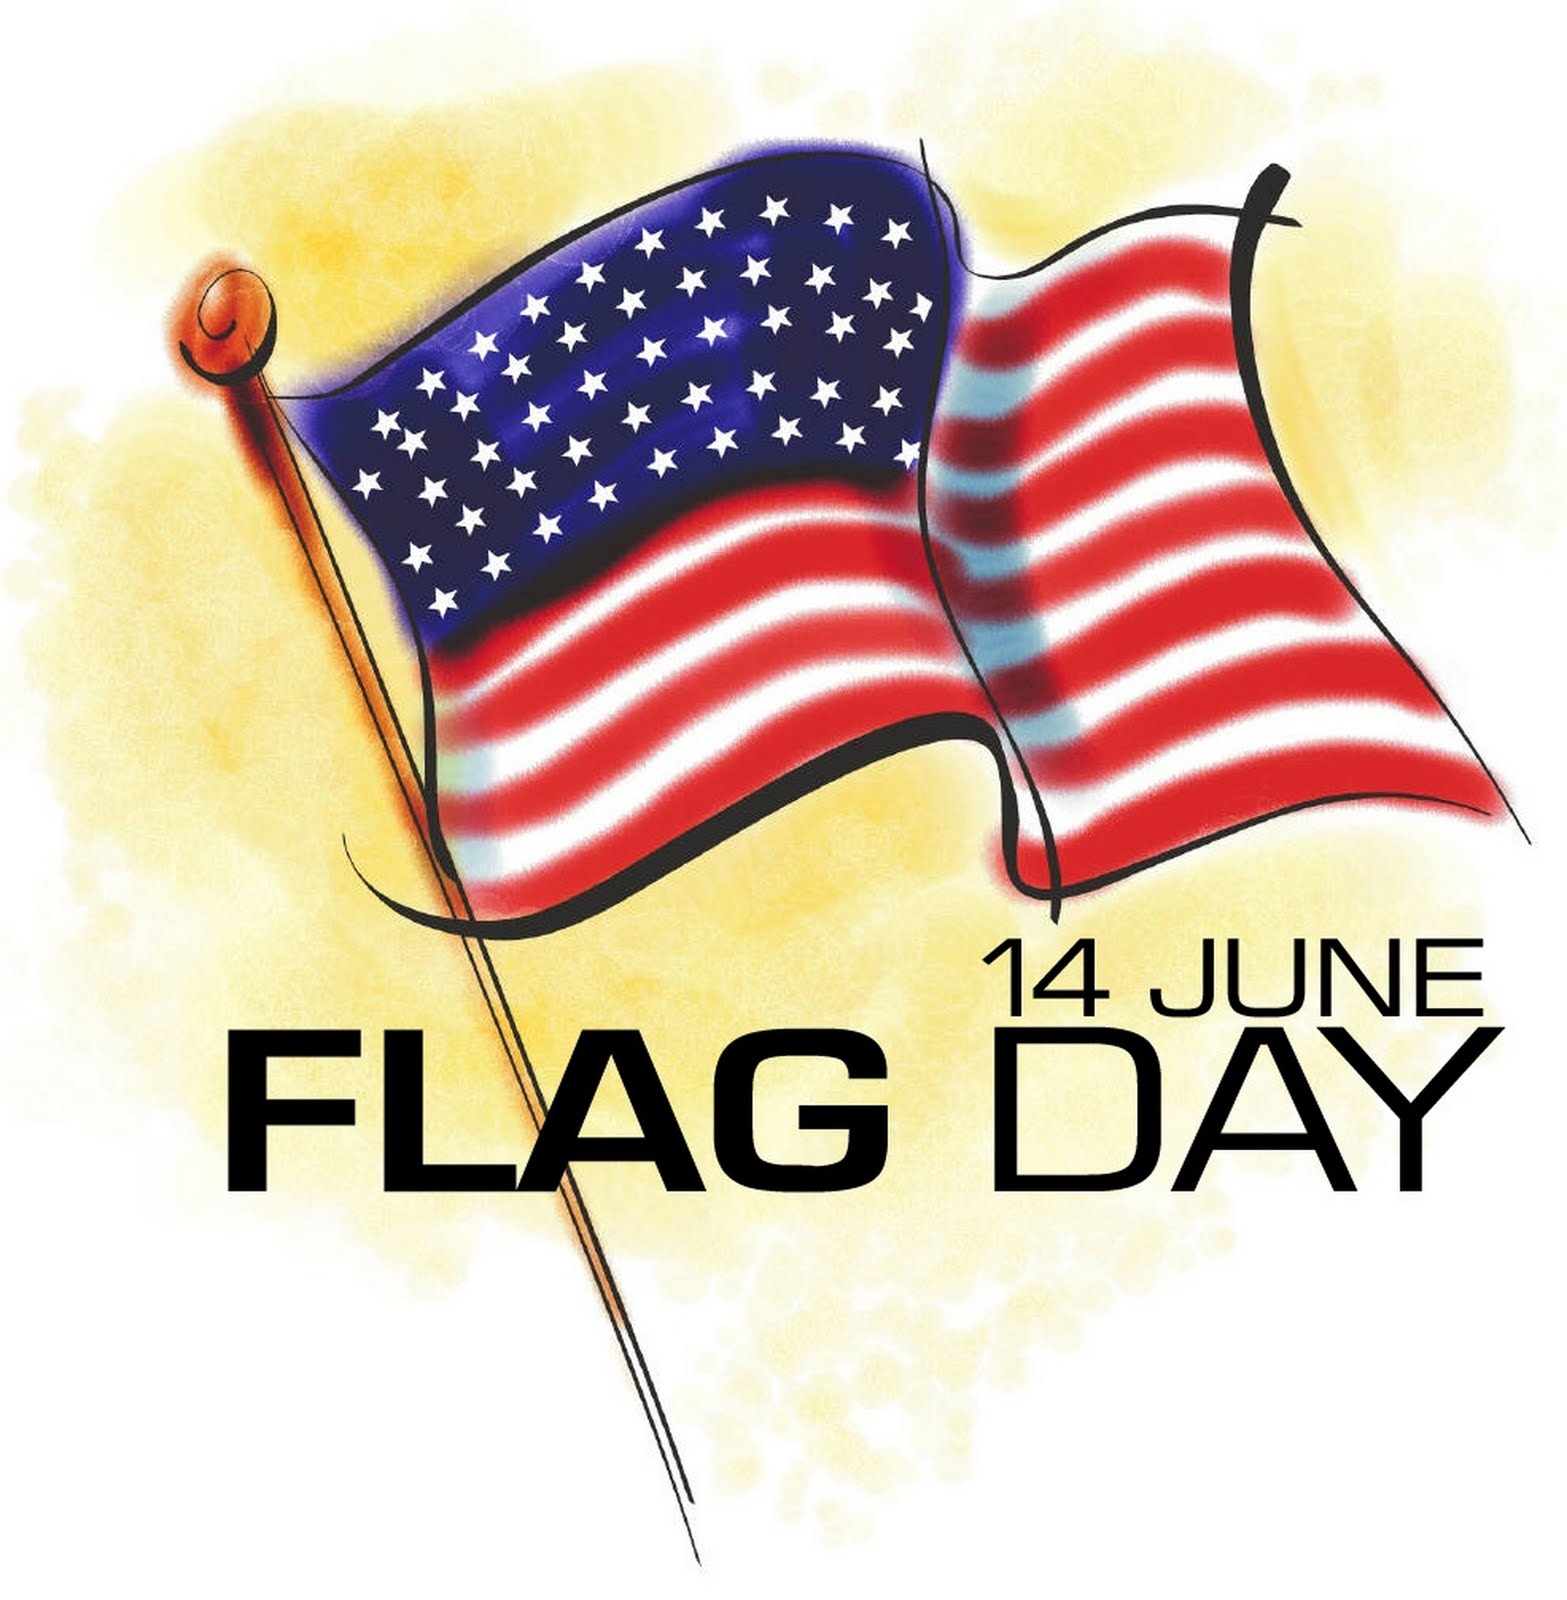 clip art for flag day - photo #1